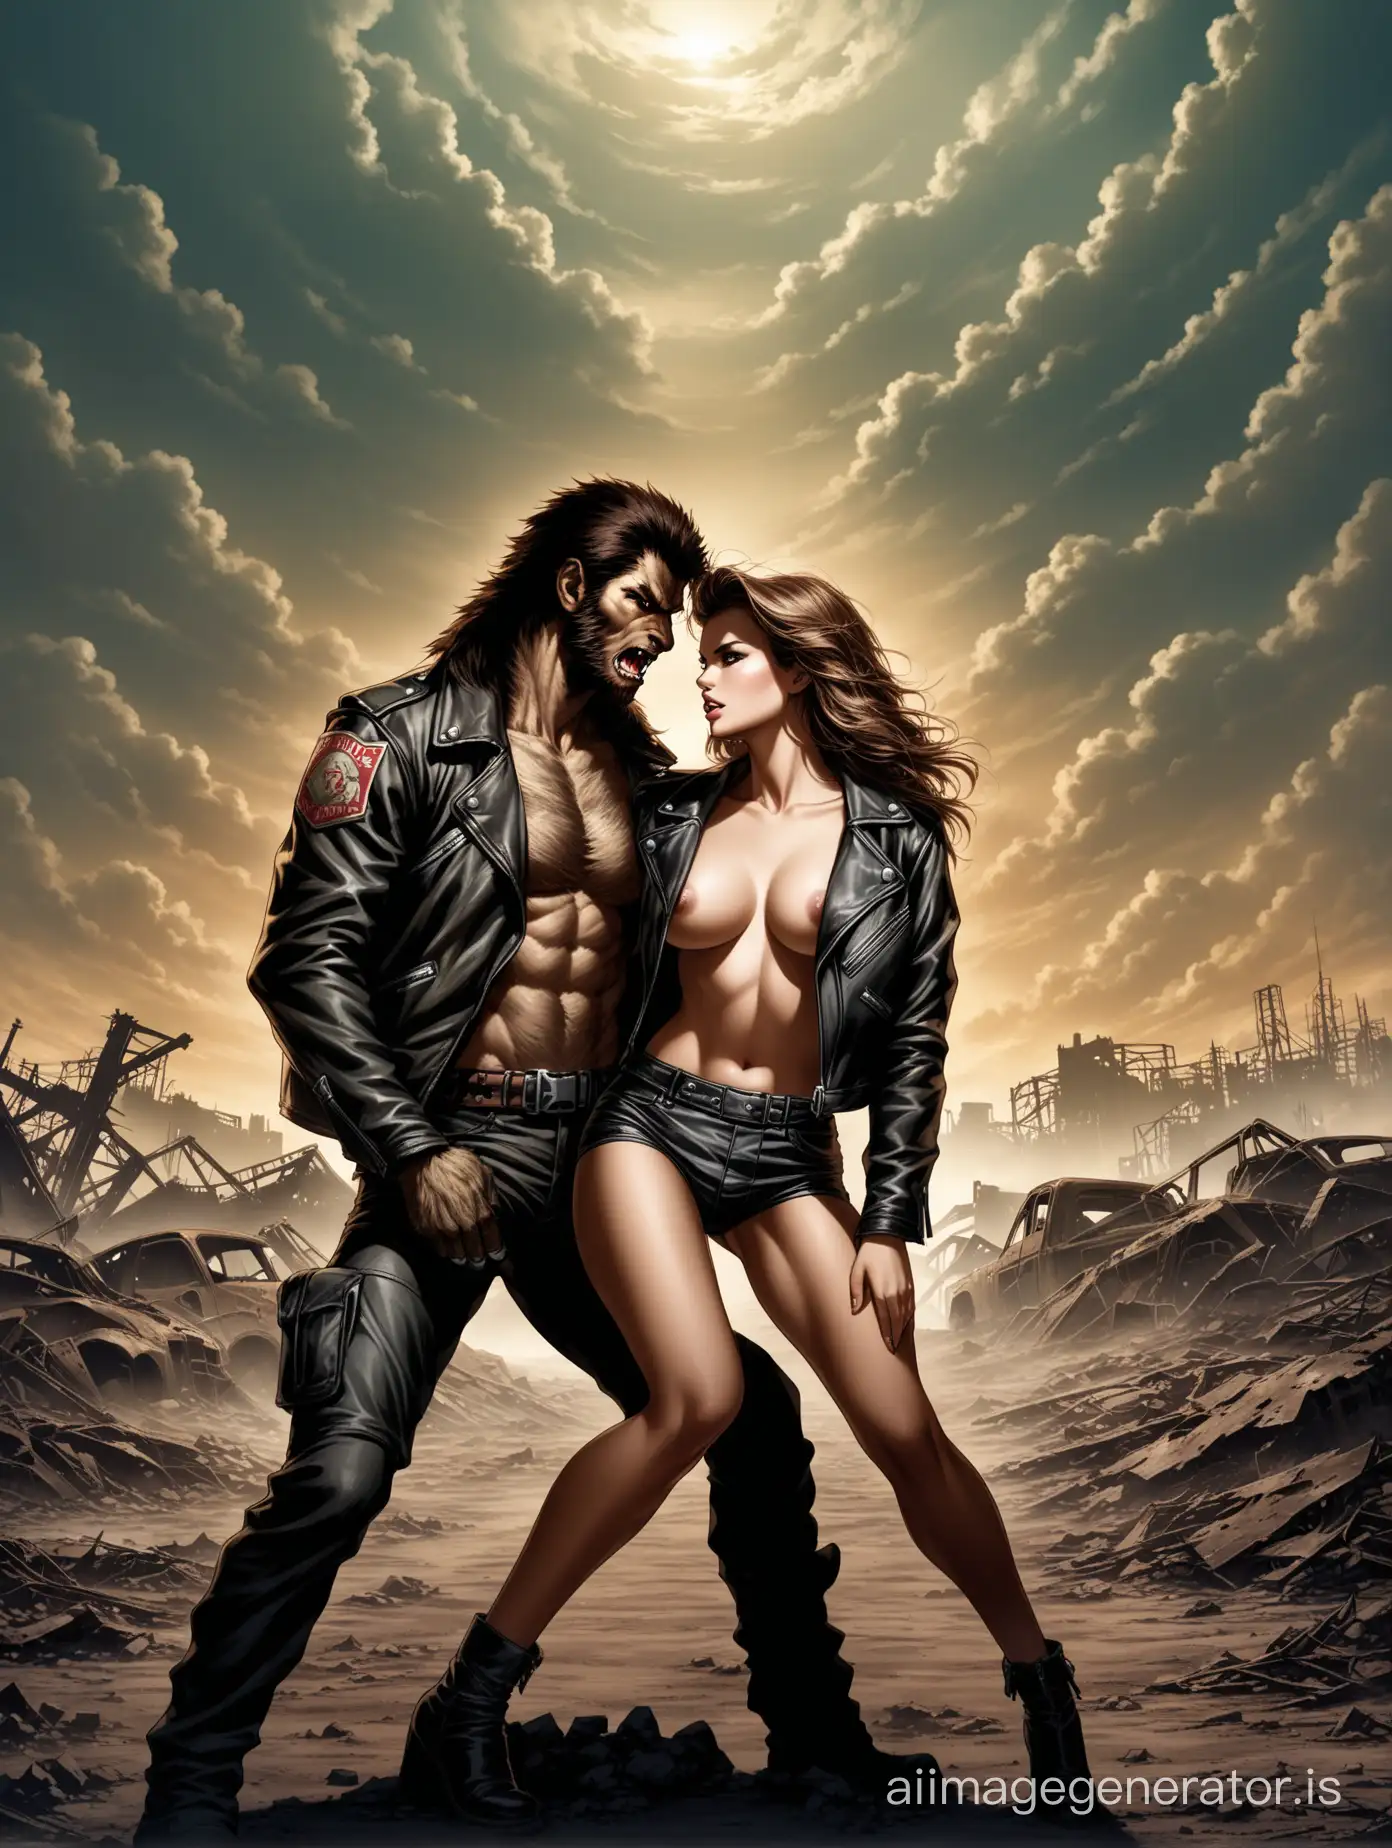 Sensual-Encounter-Werewolf-Guardian-in-PostApocalyptic-Wasteland-with-80s-Biker-Femme-Fatale